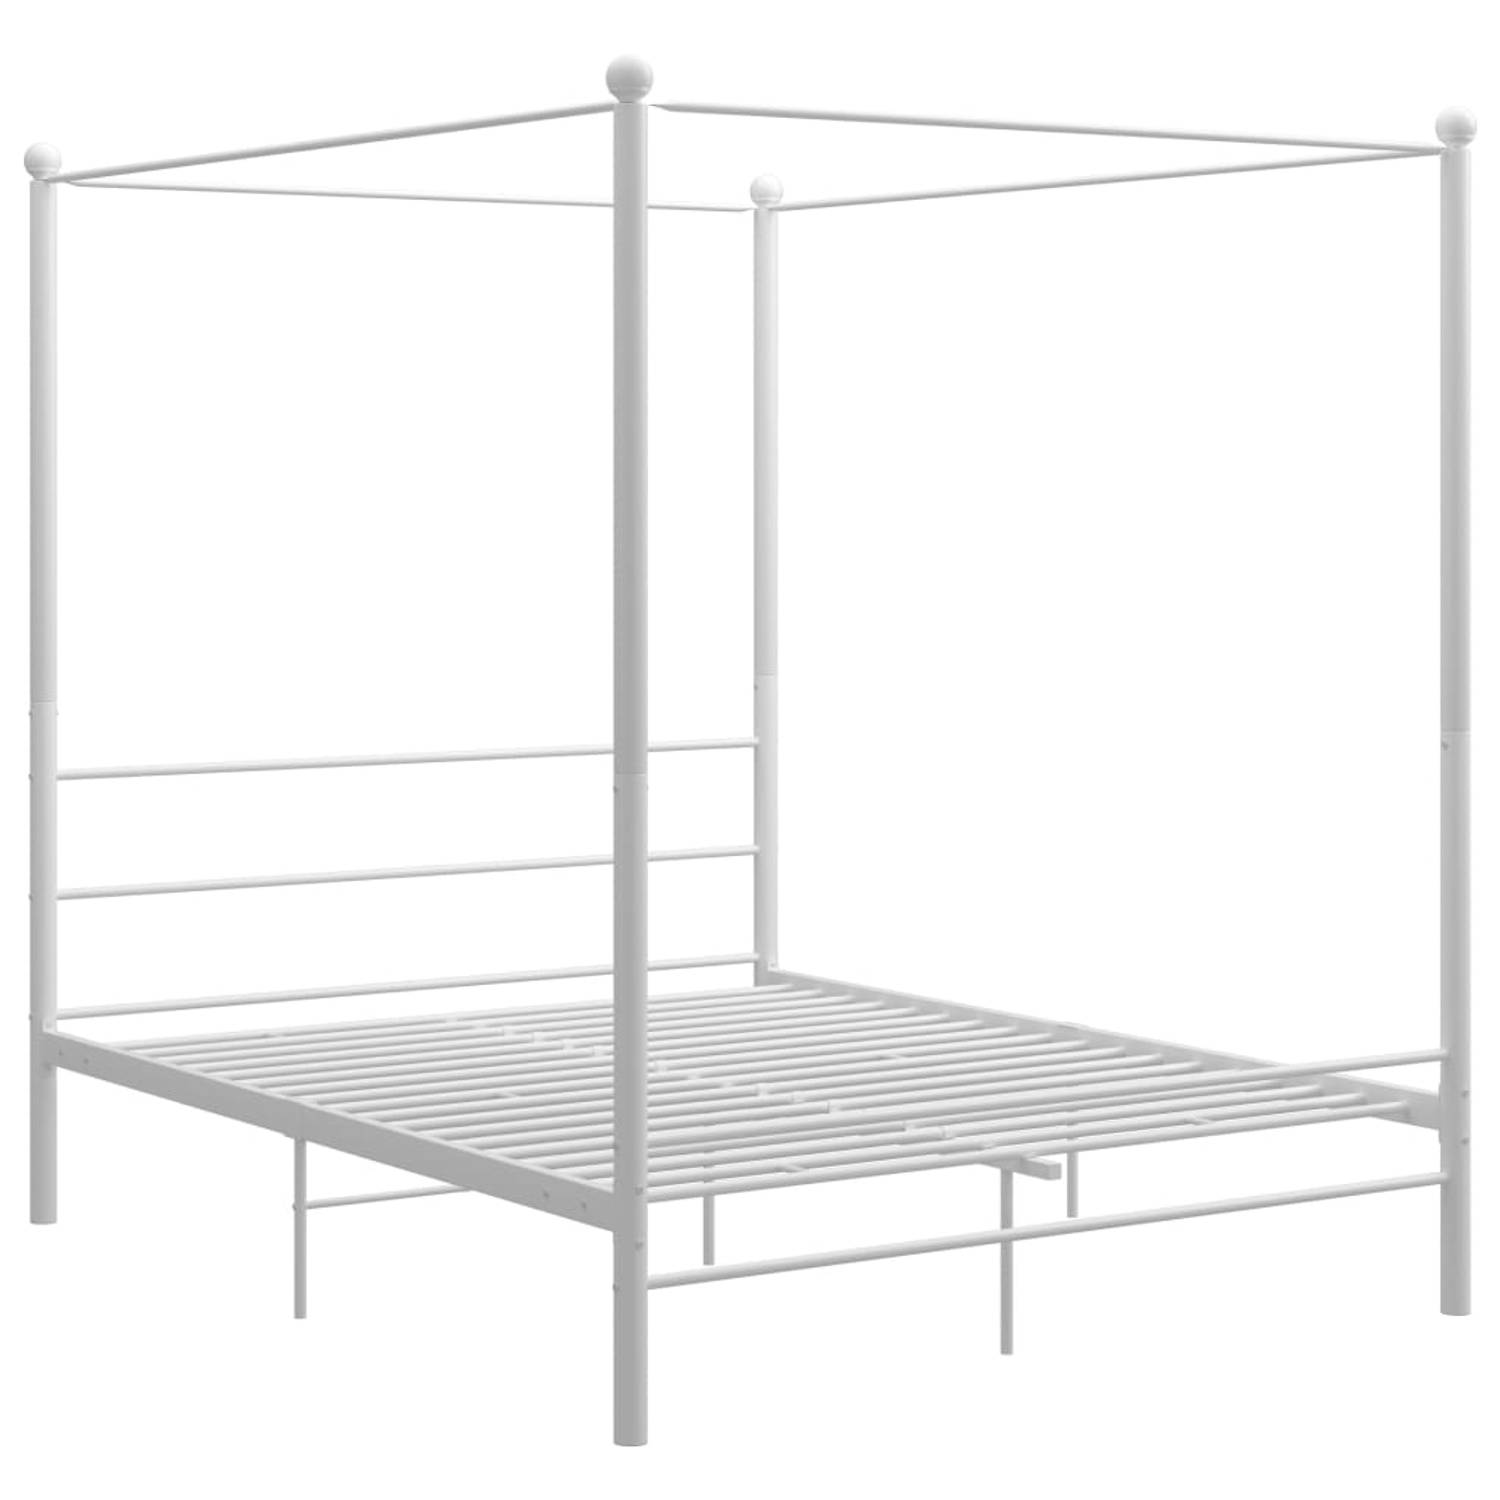 The Living Store Hemelbedframe metaal wit 160x200 cm - Bedframe - Bedframe - Bed Frame - Bed Frames - Bed - Bedden - Metalen Bedframe - Metalen Bedframes - 2-persoonsbed - 2